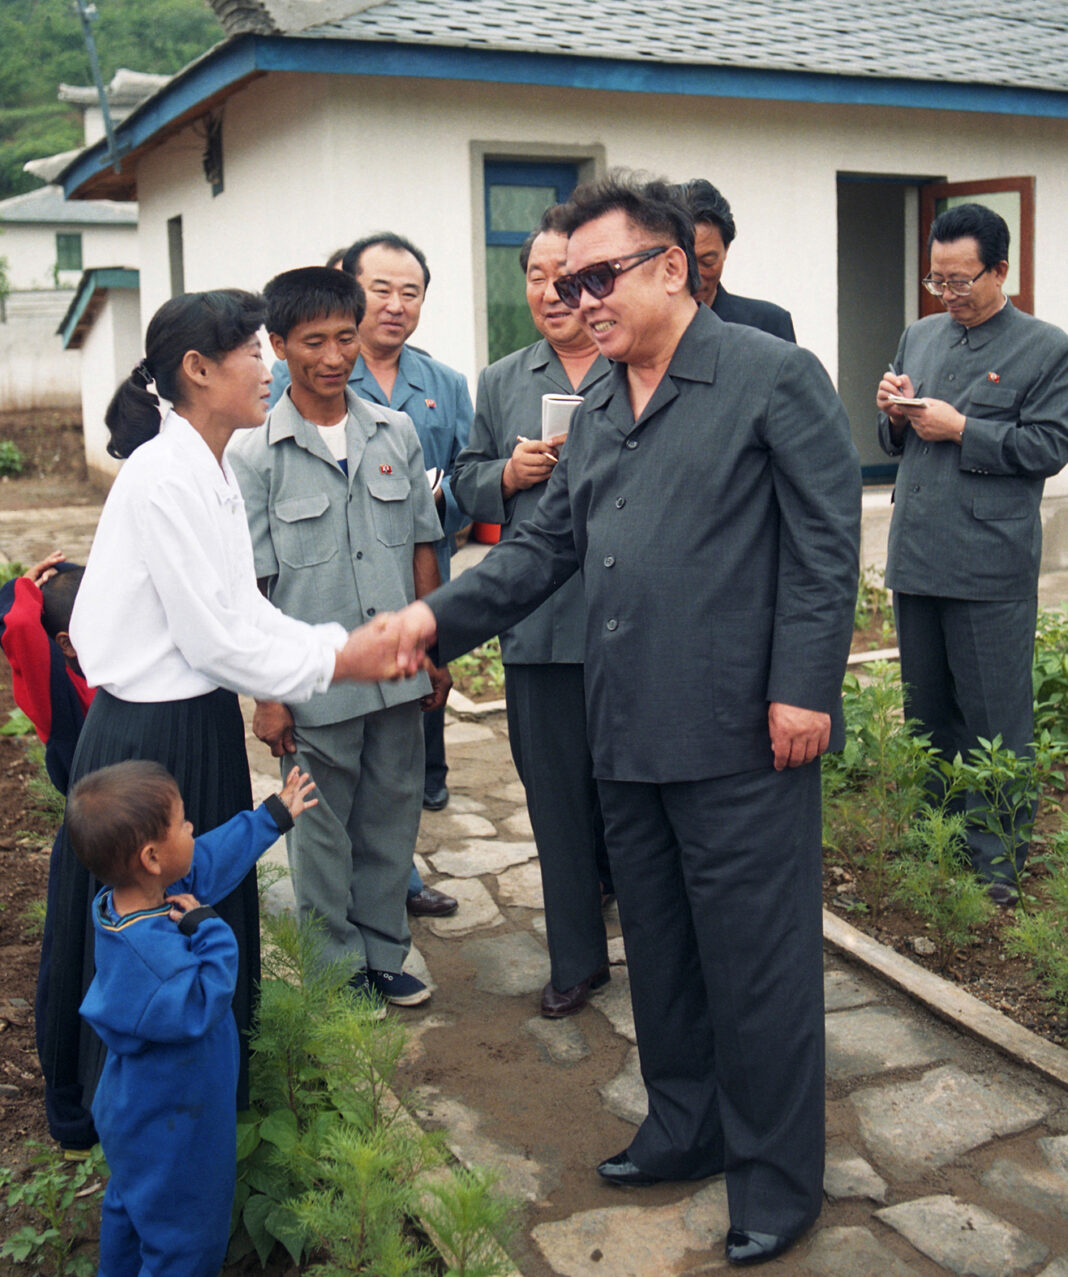 Diplomatic Corner: Korea remembers Kim Jong Il as "Son of people"